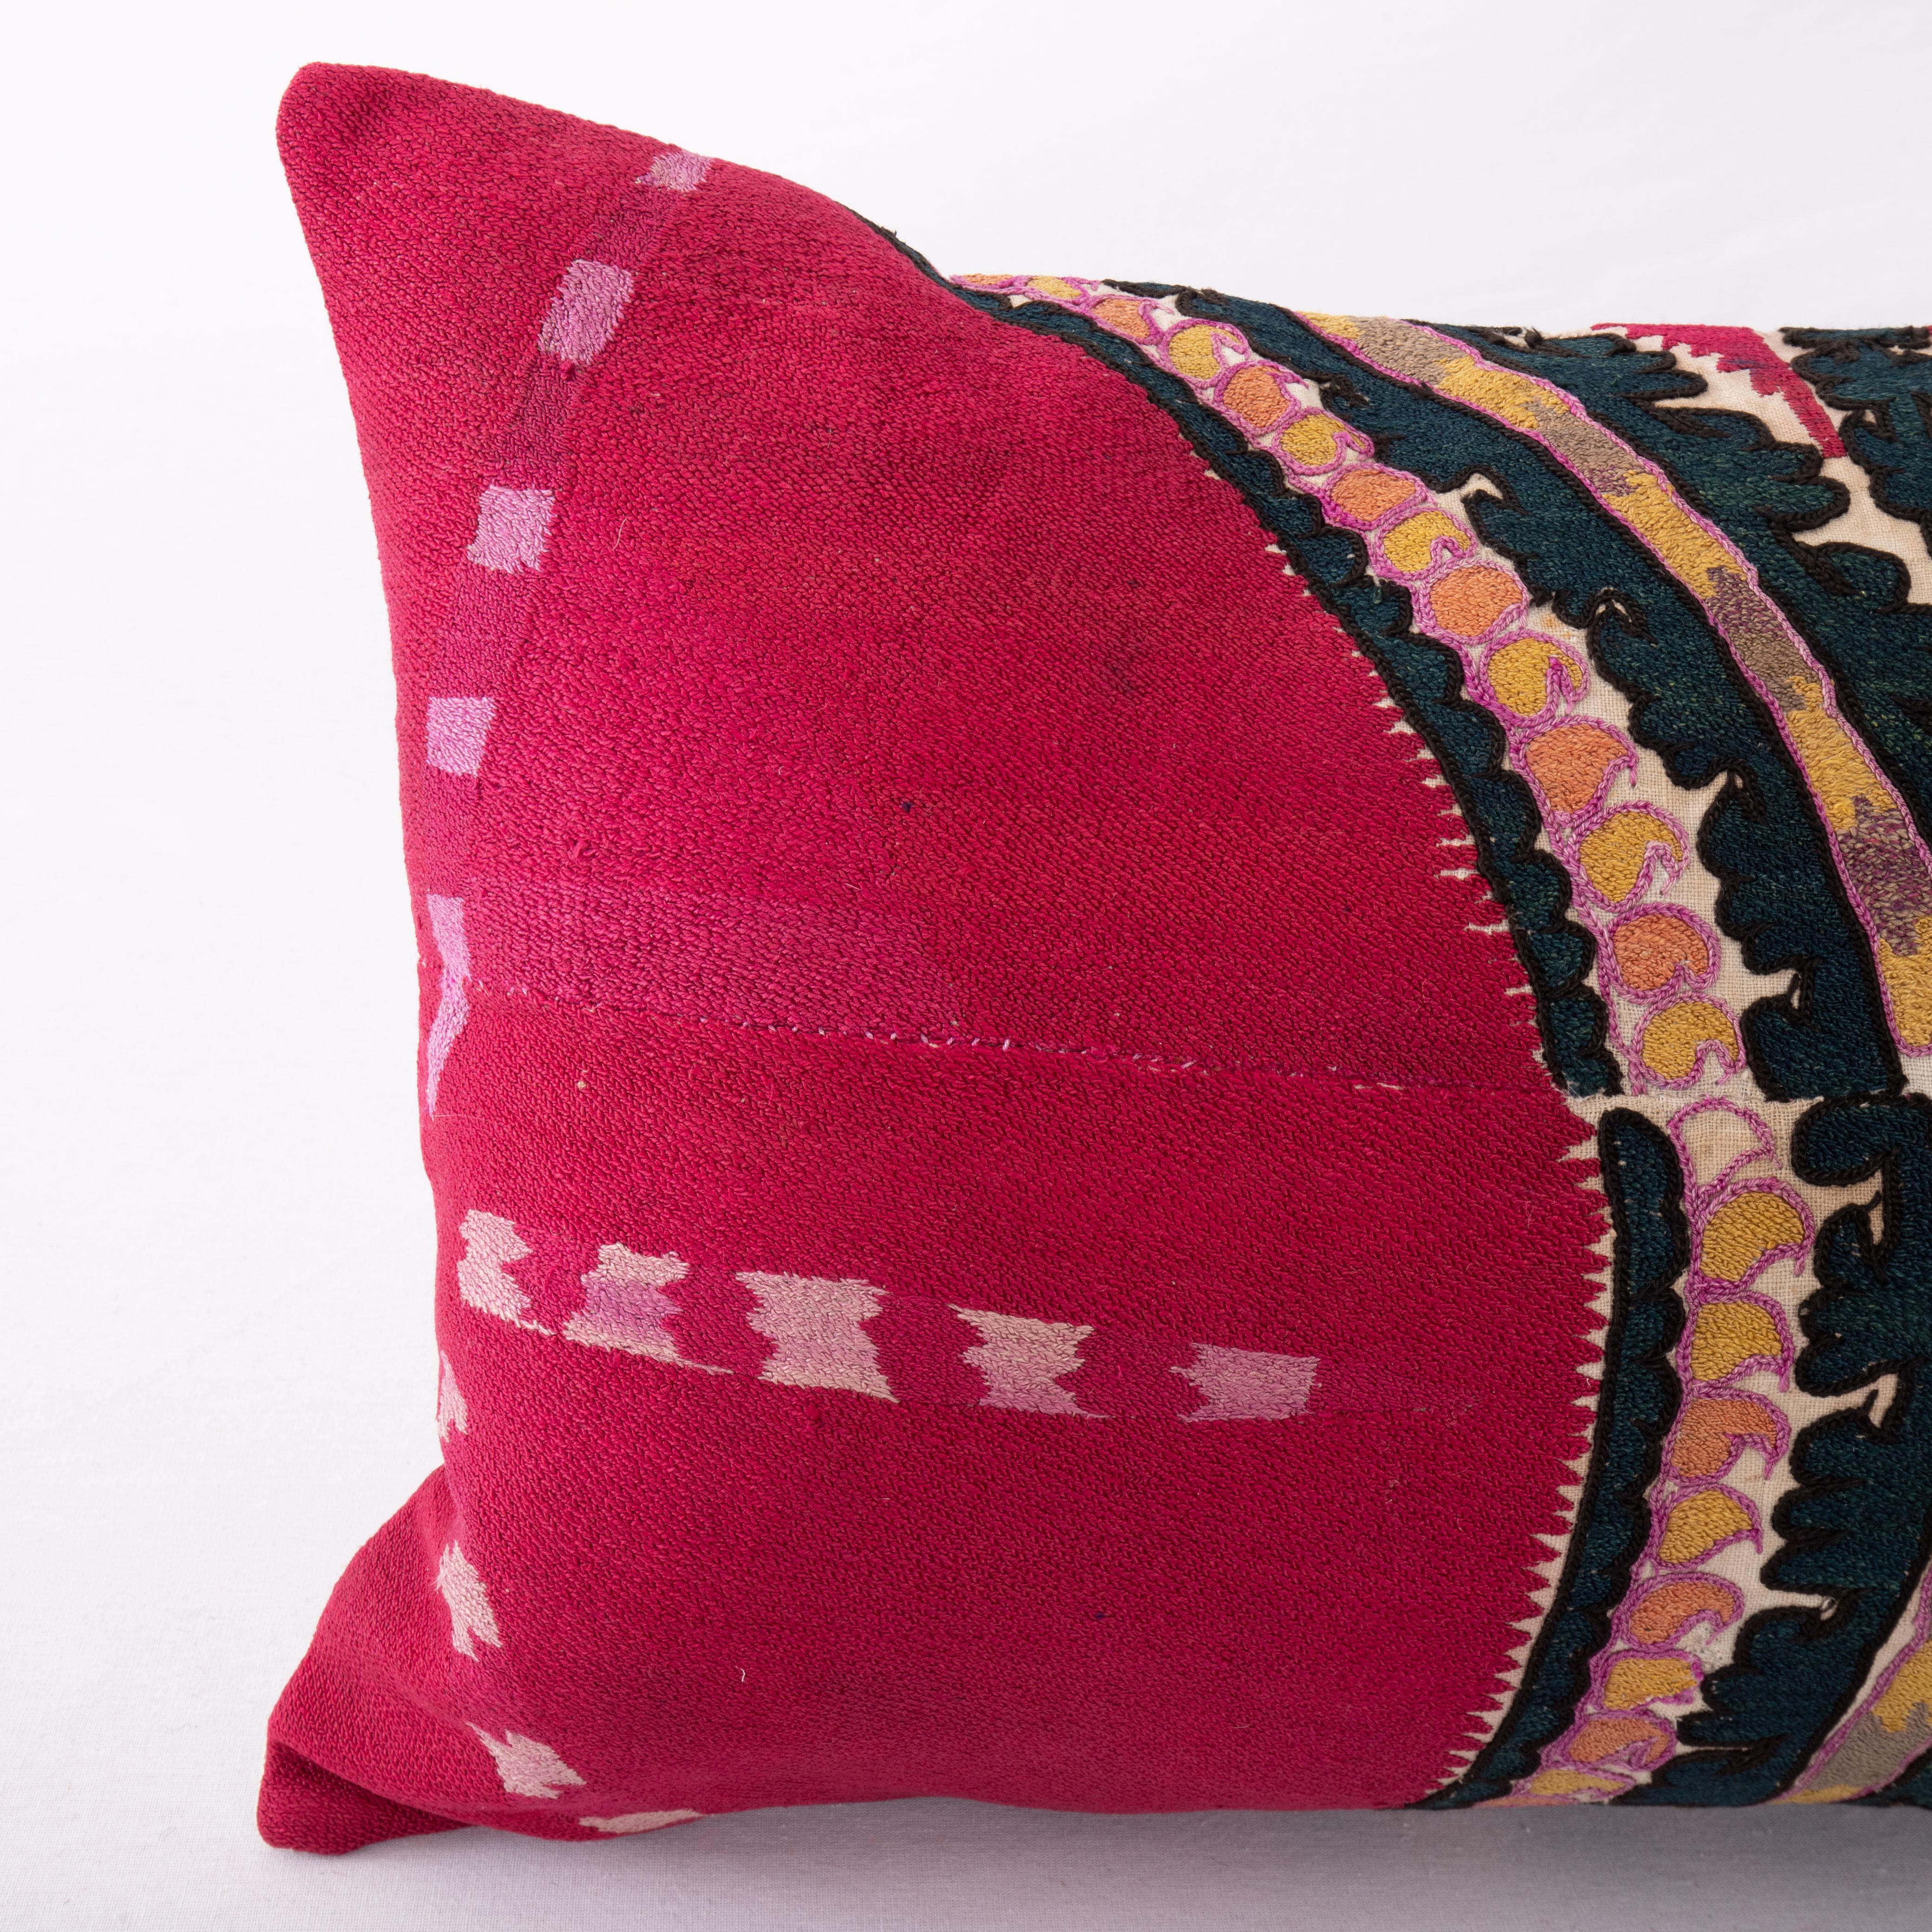 Uzbek Suzani Pillow Cover Made from Late 19th Century Tashkent Suzani